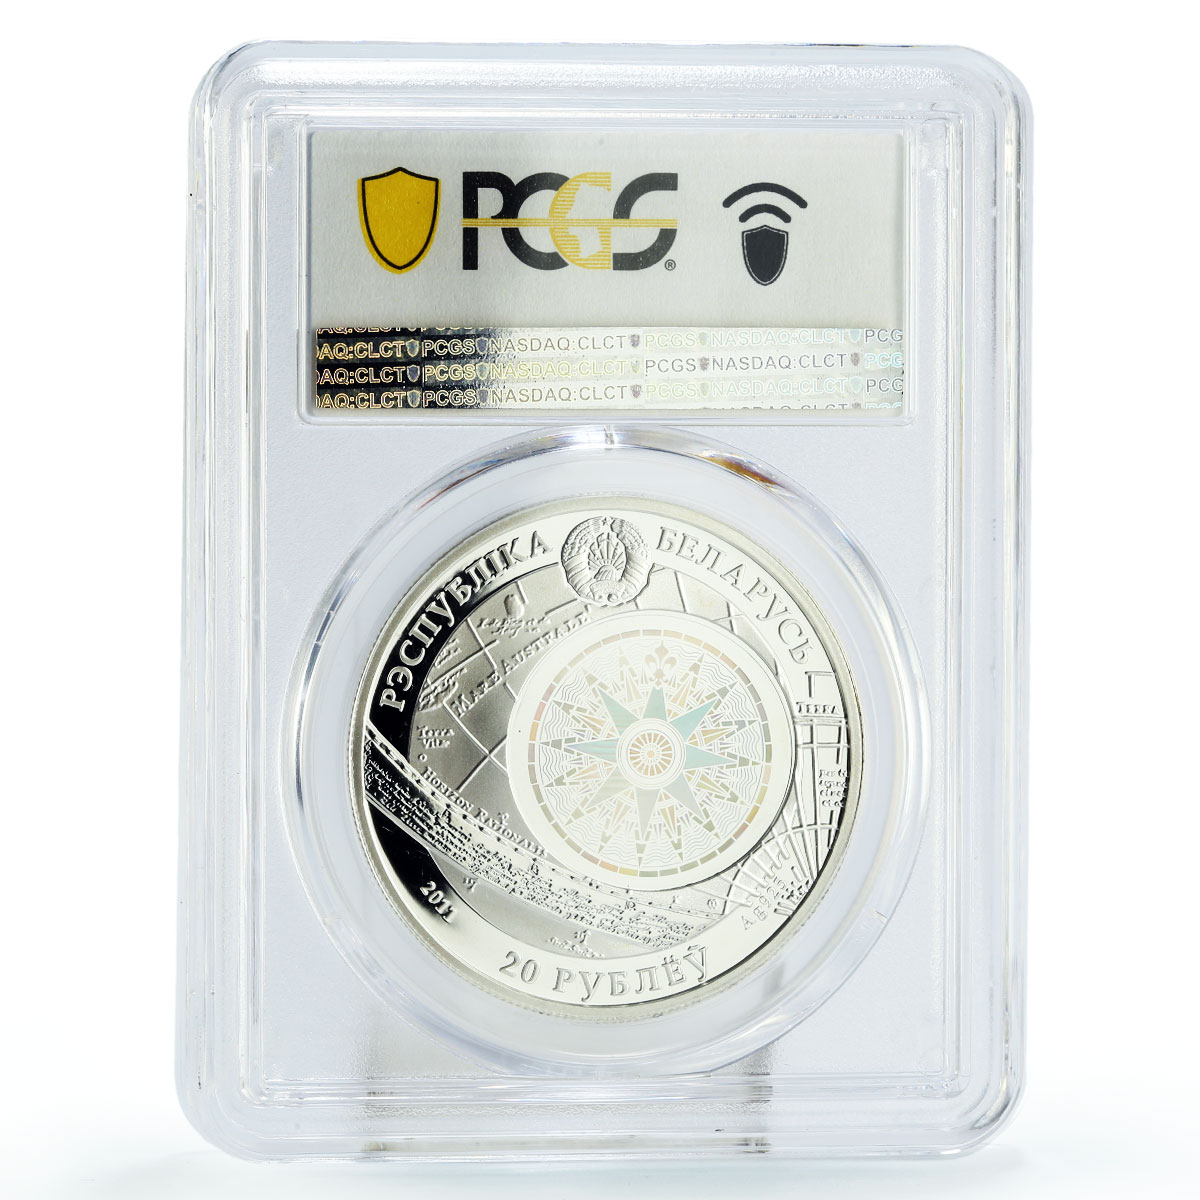 Belarus 20 rubles Kruzenshtern Ship Clipper SP68 PCGS hologram silver coin 2011